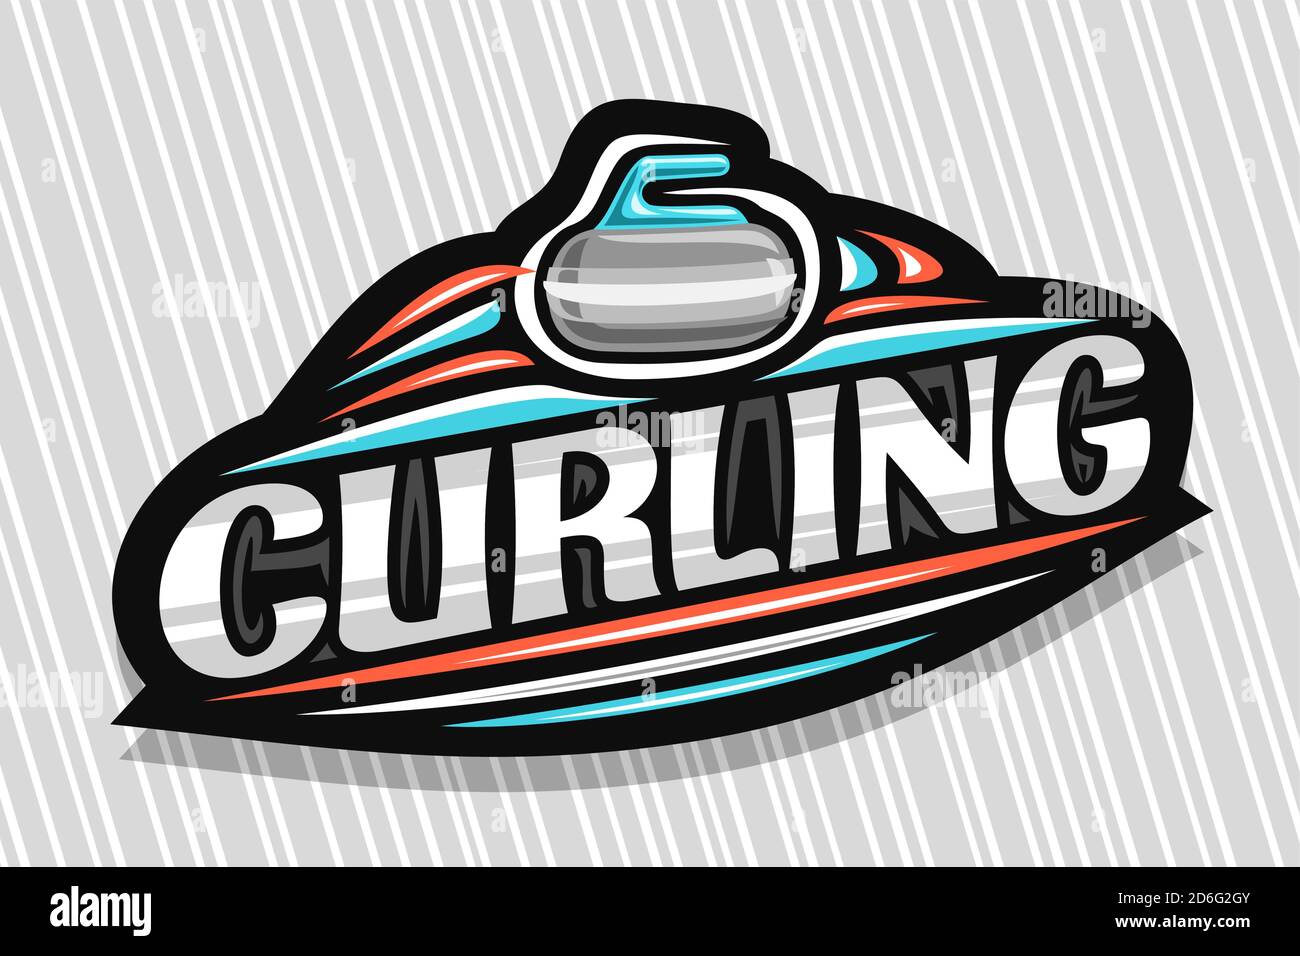 Vector logo for Curling Sport, dark modern emblem with illustration of sliding stone in target, unique lettering for grey word curling, sports sign wi Stock Vector